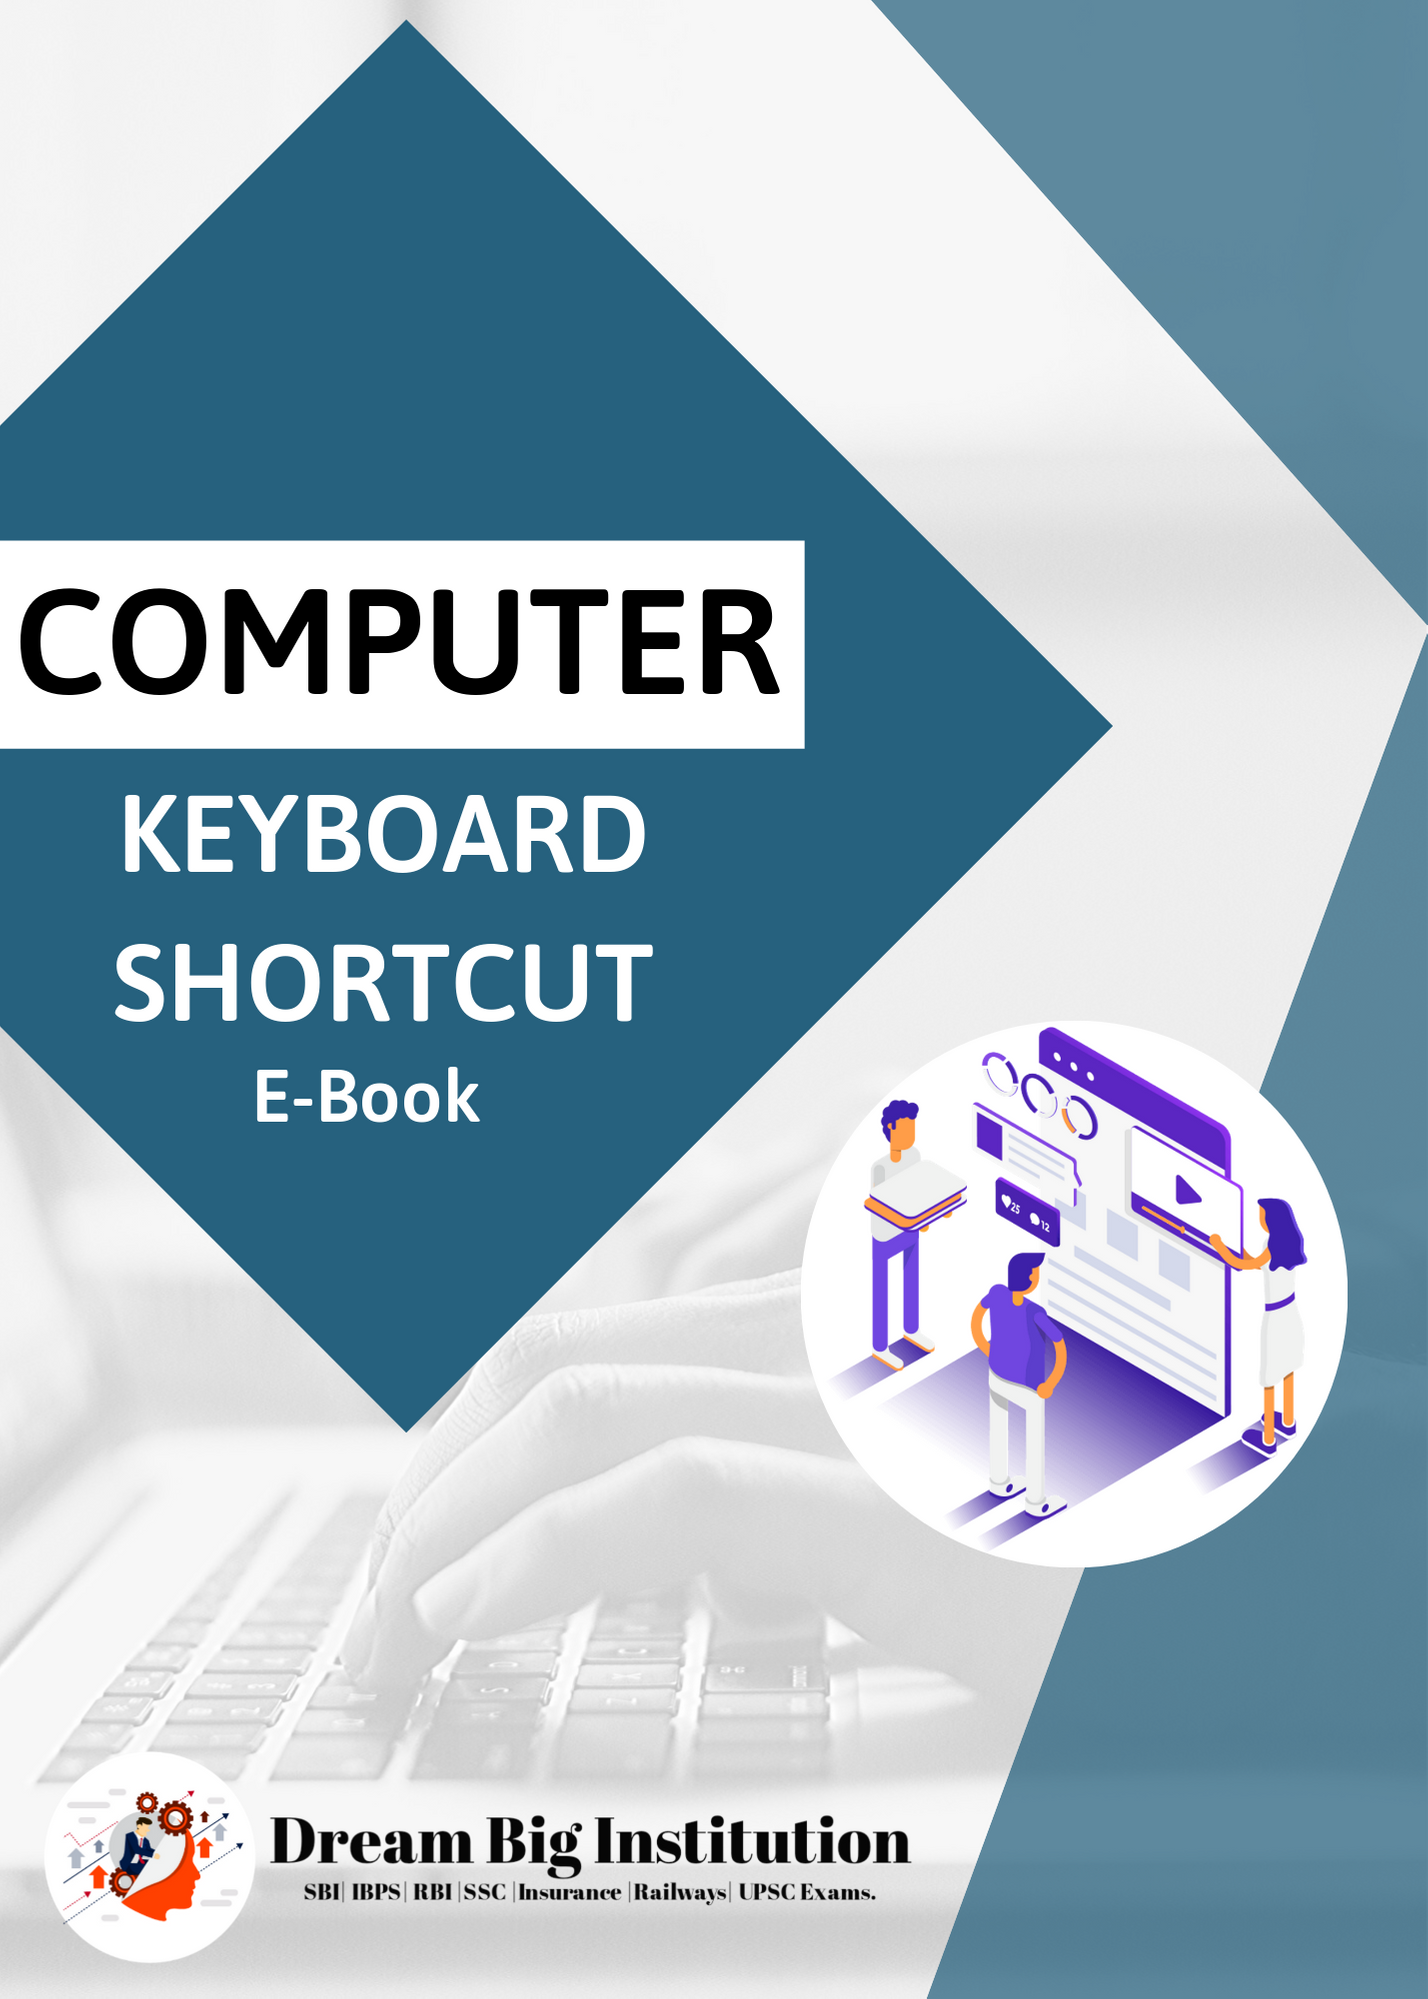 Computer keyboard shortcuts E-Book 